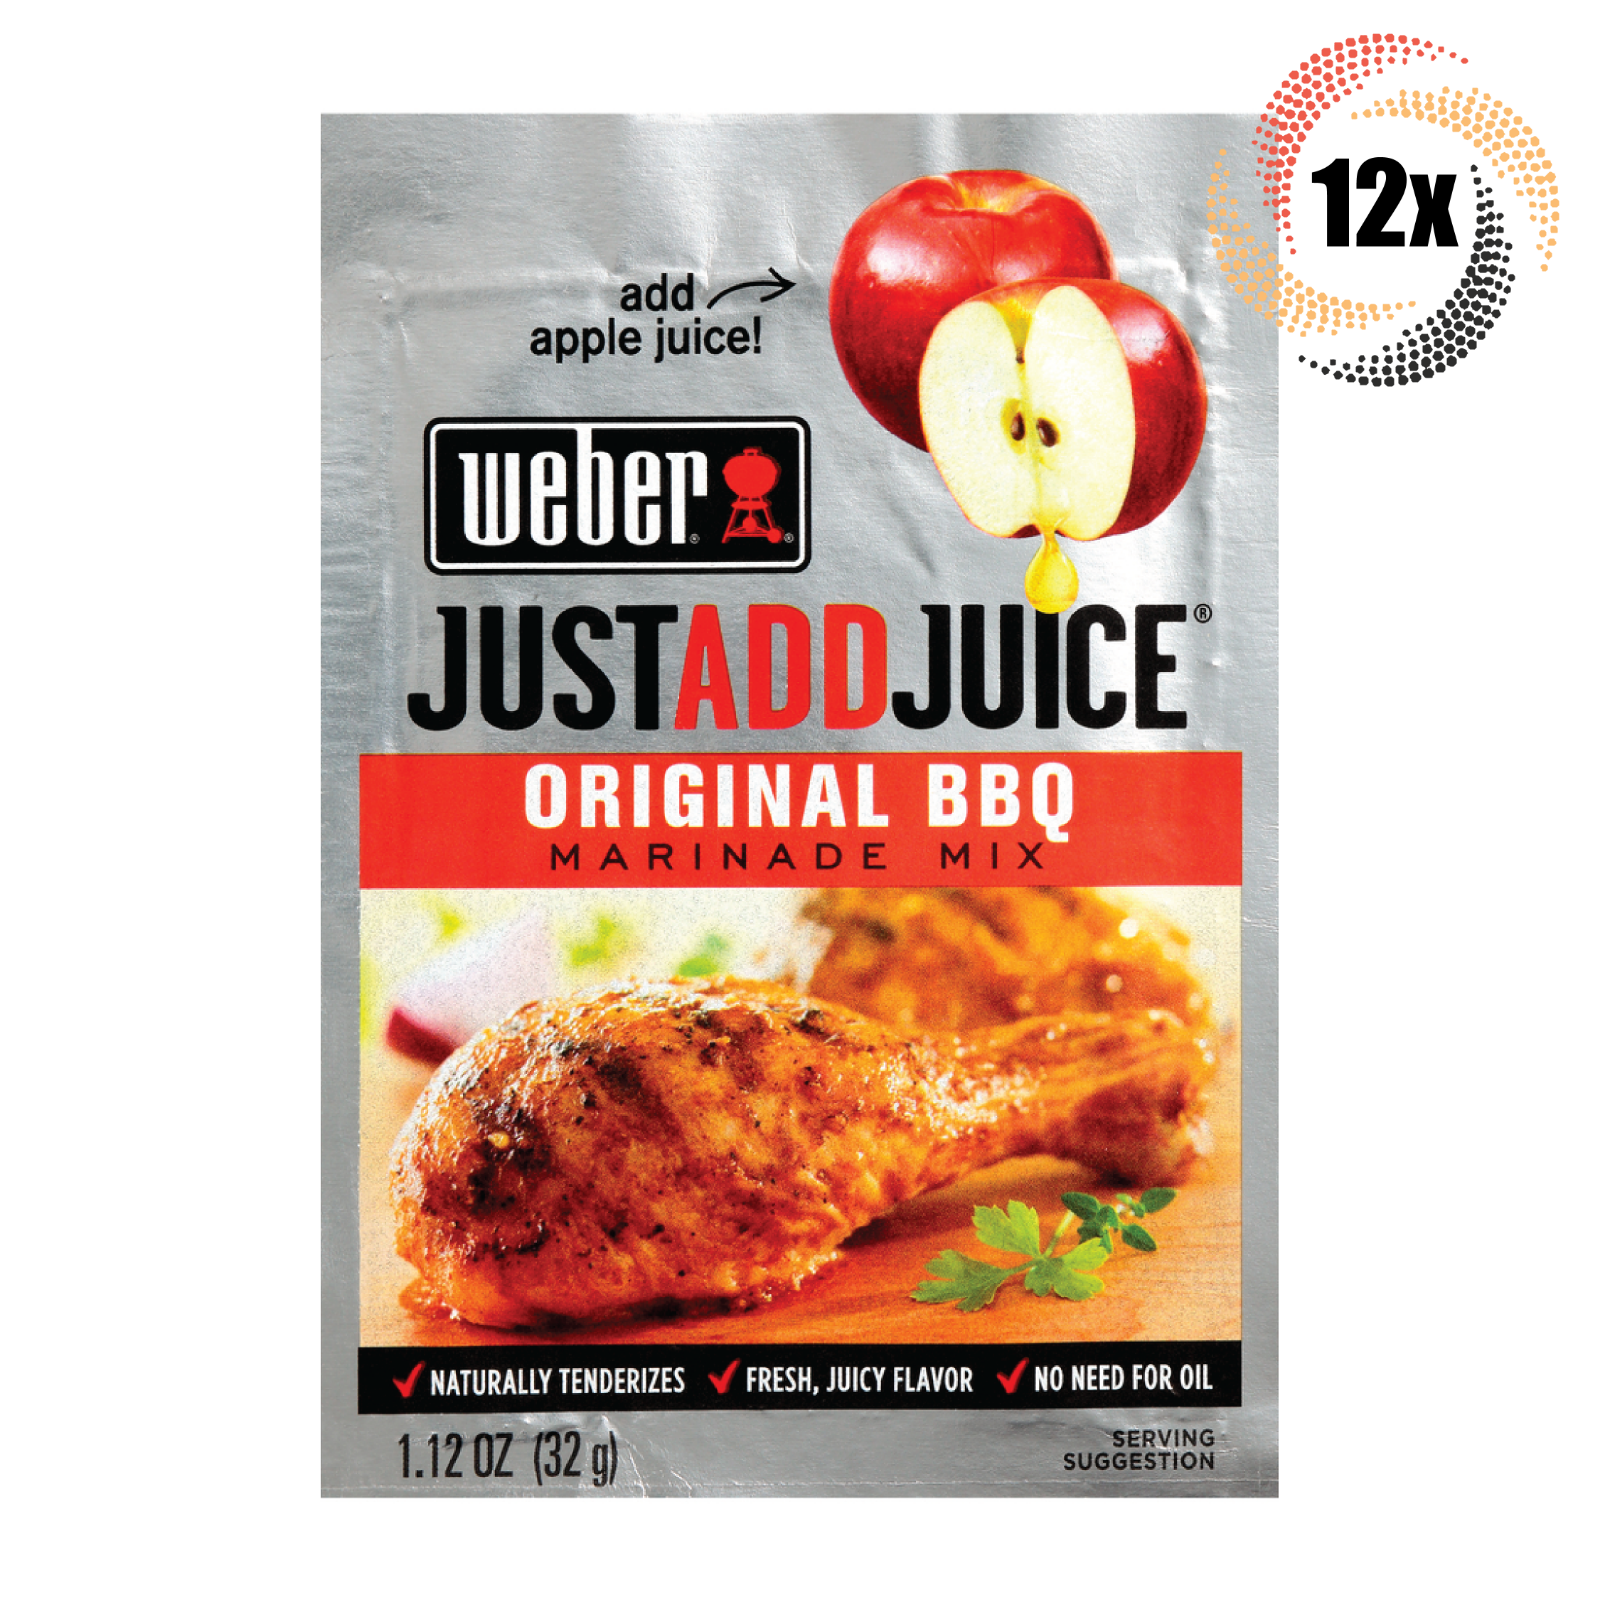 12x Packet Weber Just Add Juice Original BBQ Marinade Mix 1.12oz | Fast Shipping - $25.47